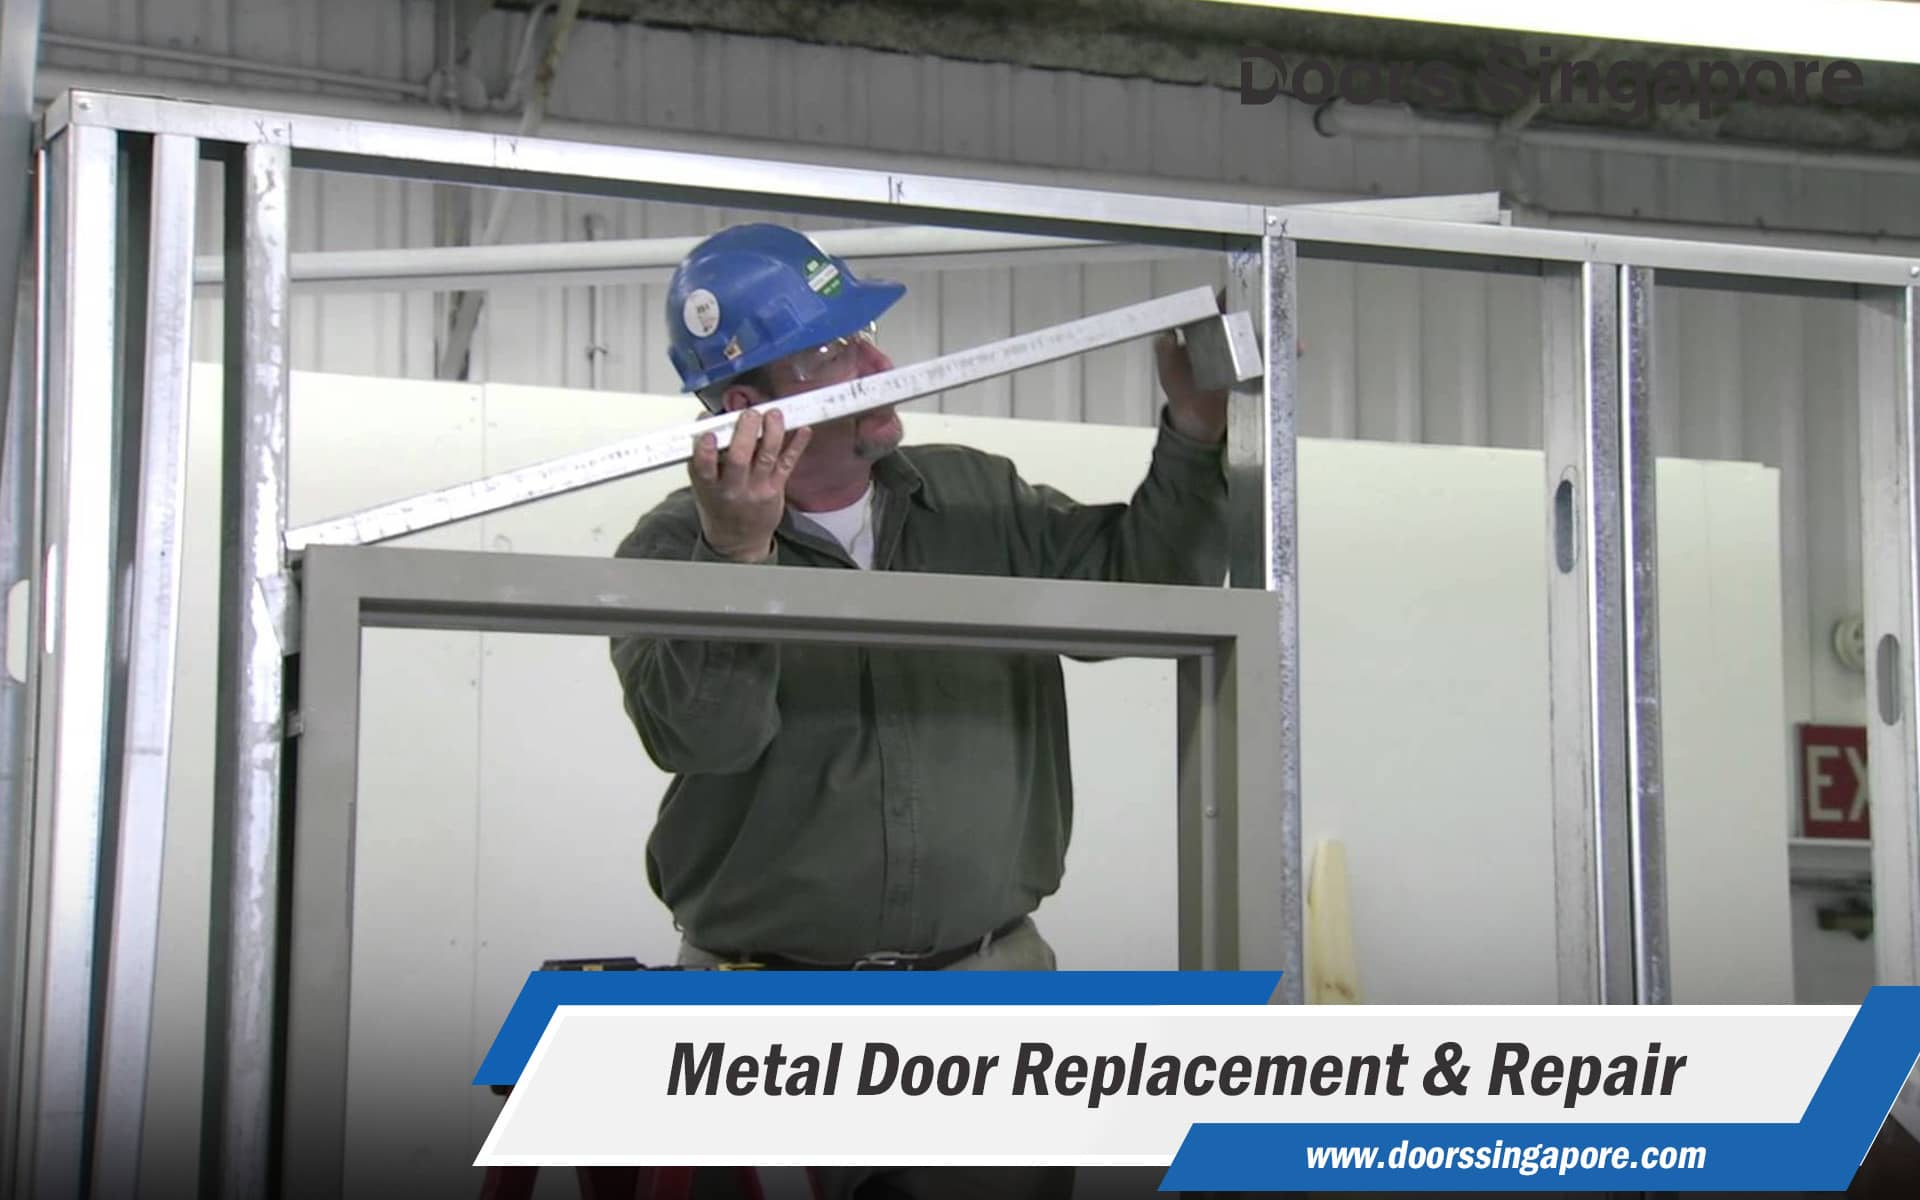 Metal Door Replacement & Repair